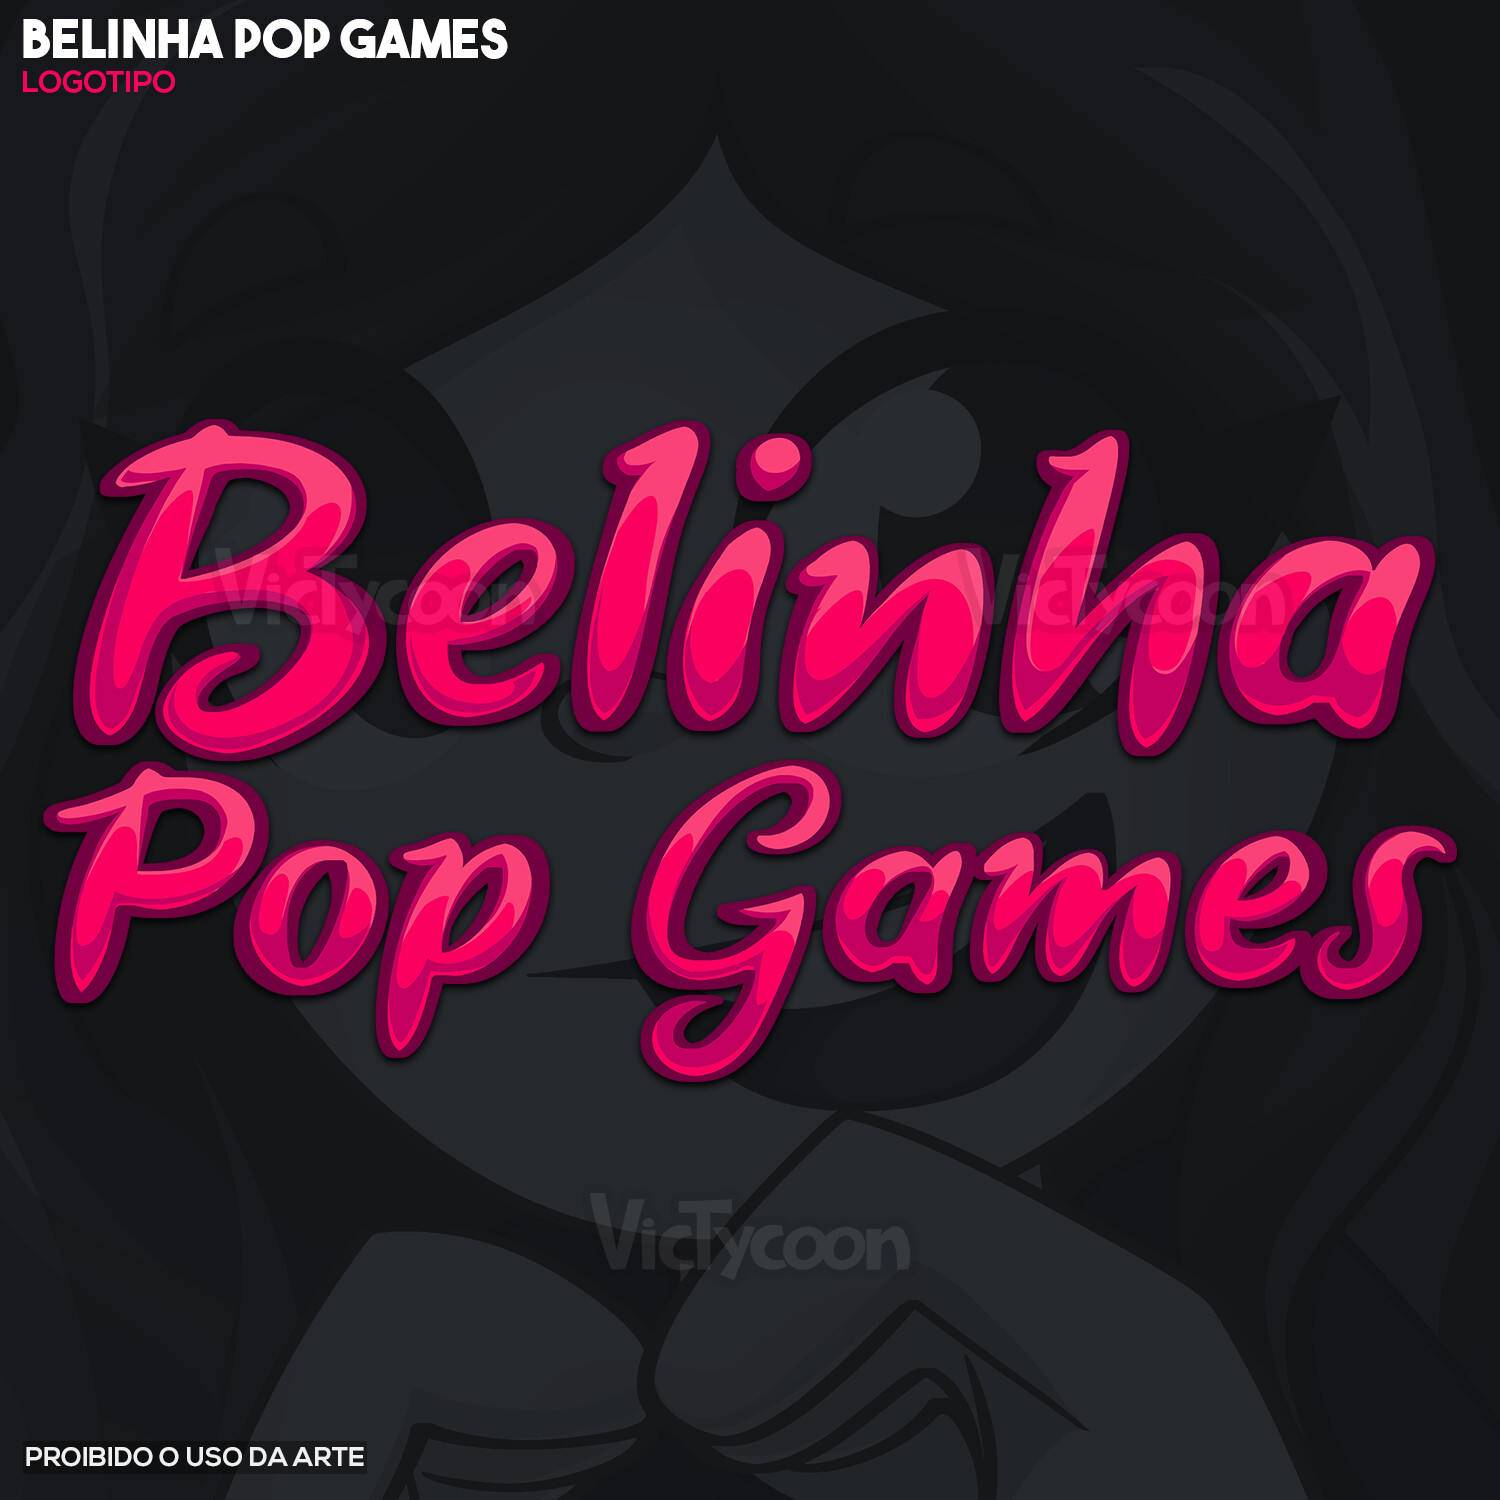 AVATAR - Belinha Pop Games ( Roblox) by VicTycoon on DeviantArt